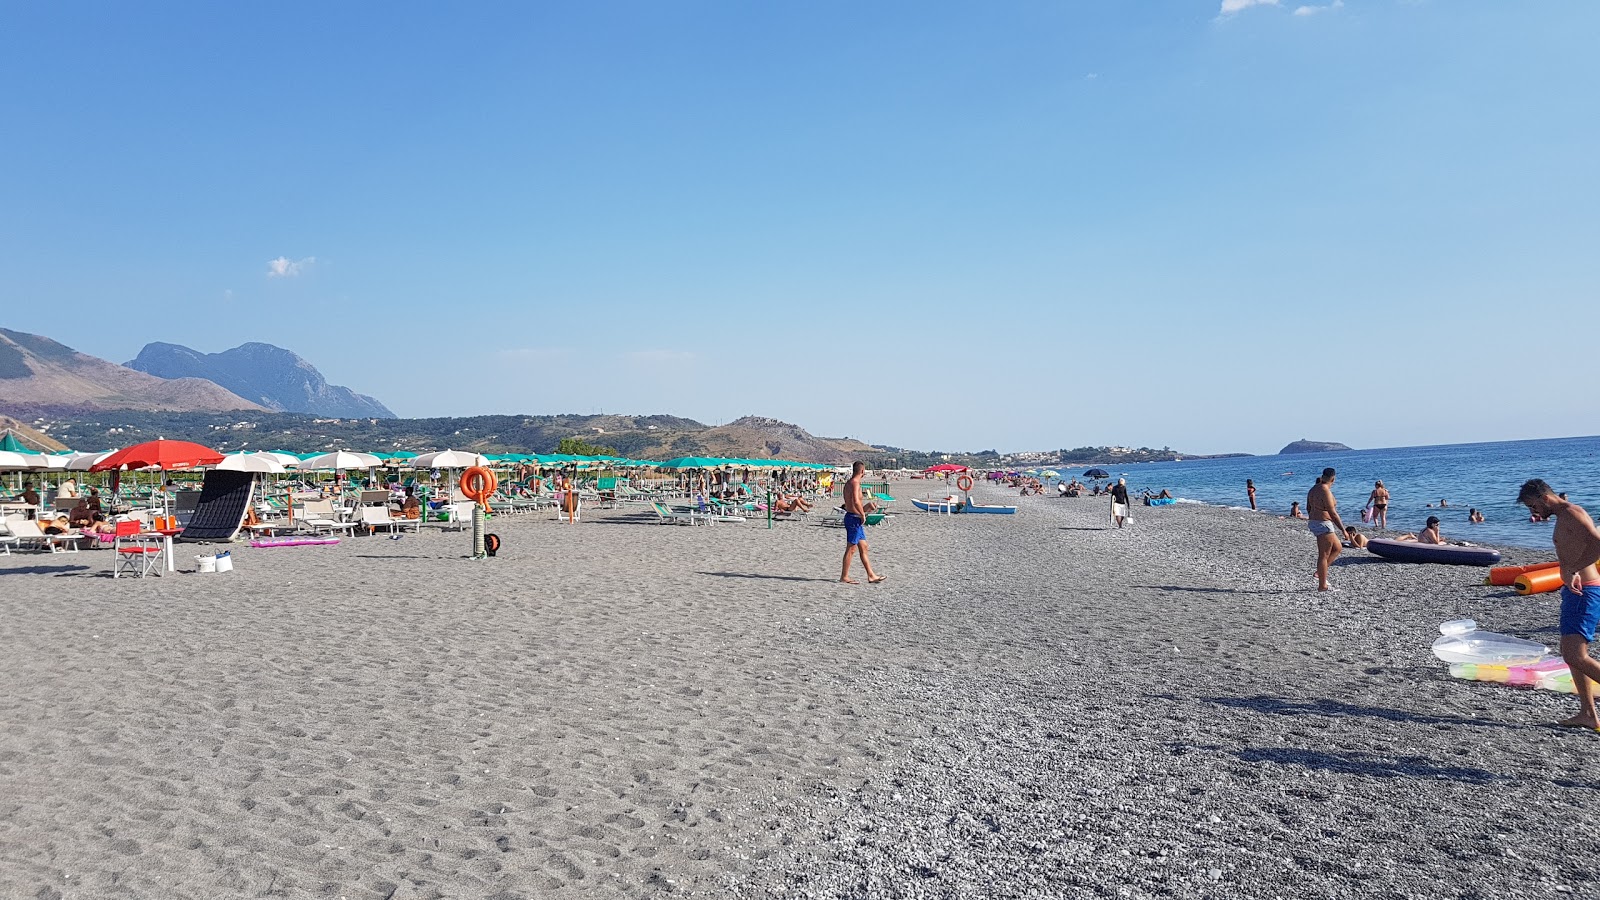 Foto von Acchio-Fiumicello beach mit grauer sand Oberfläche